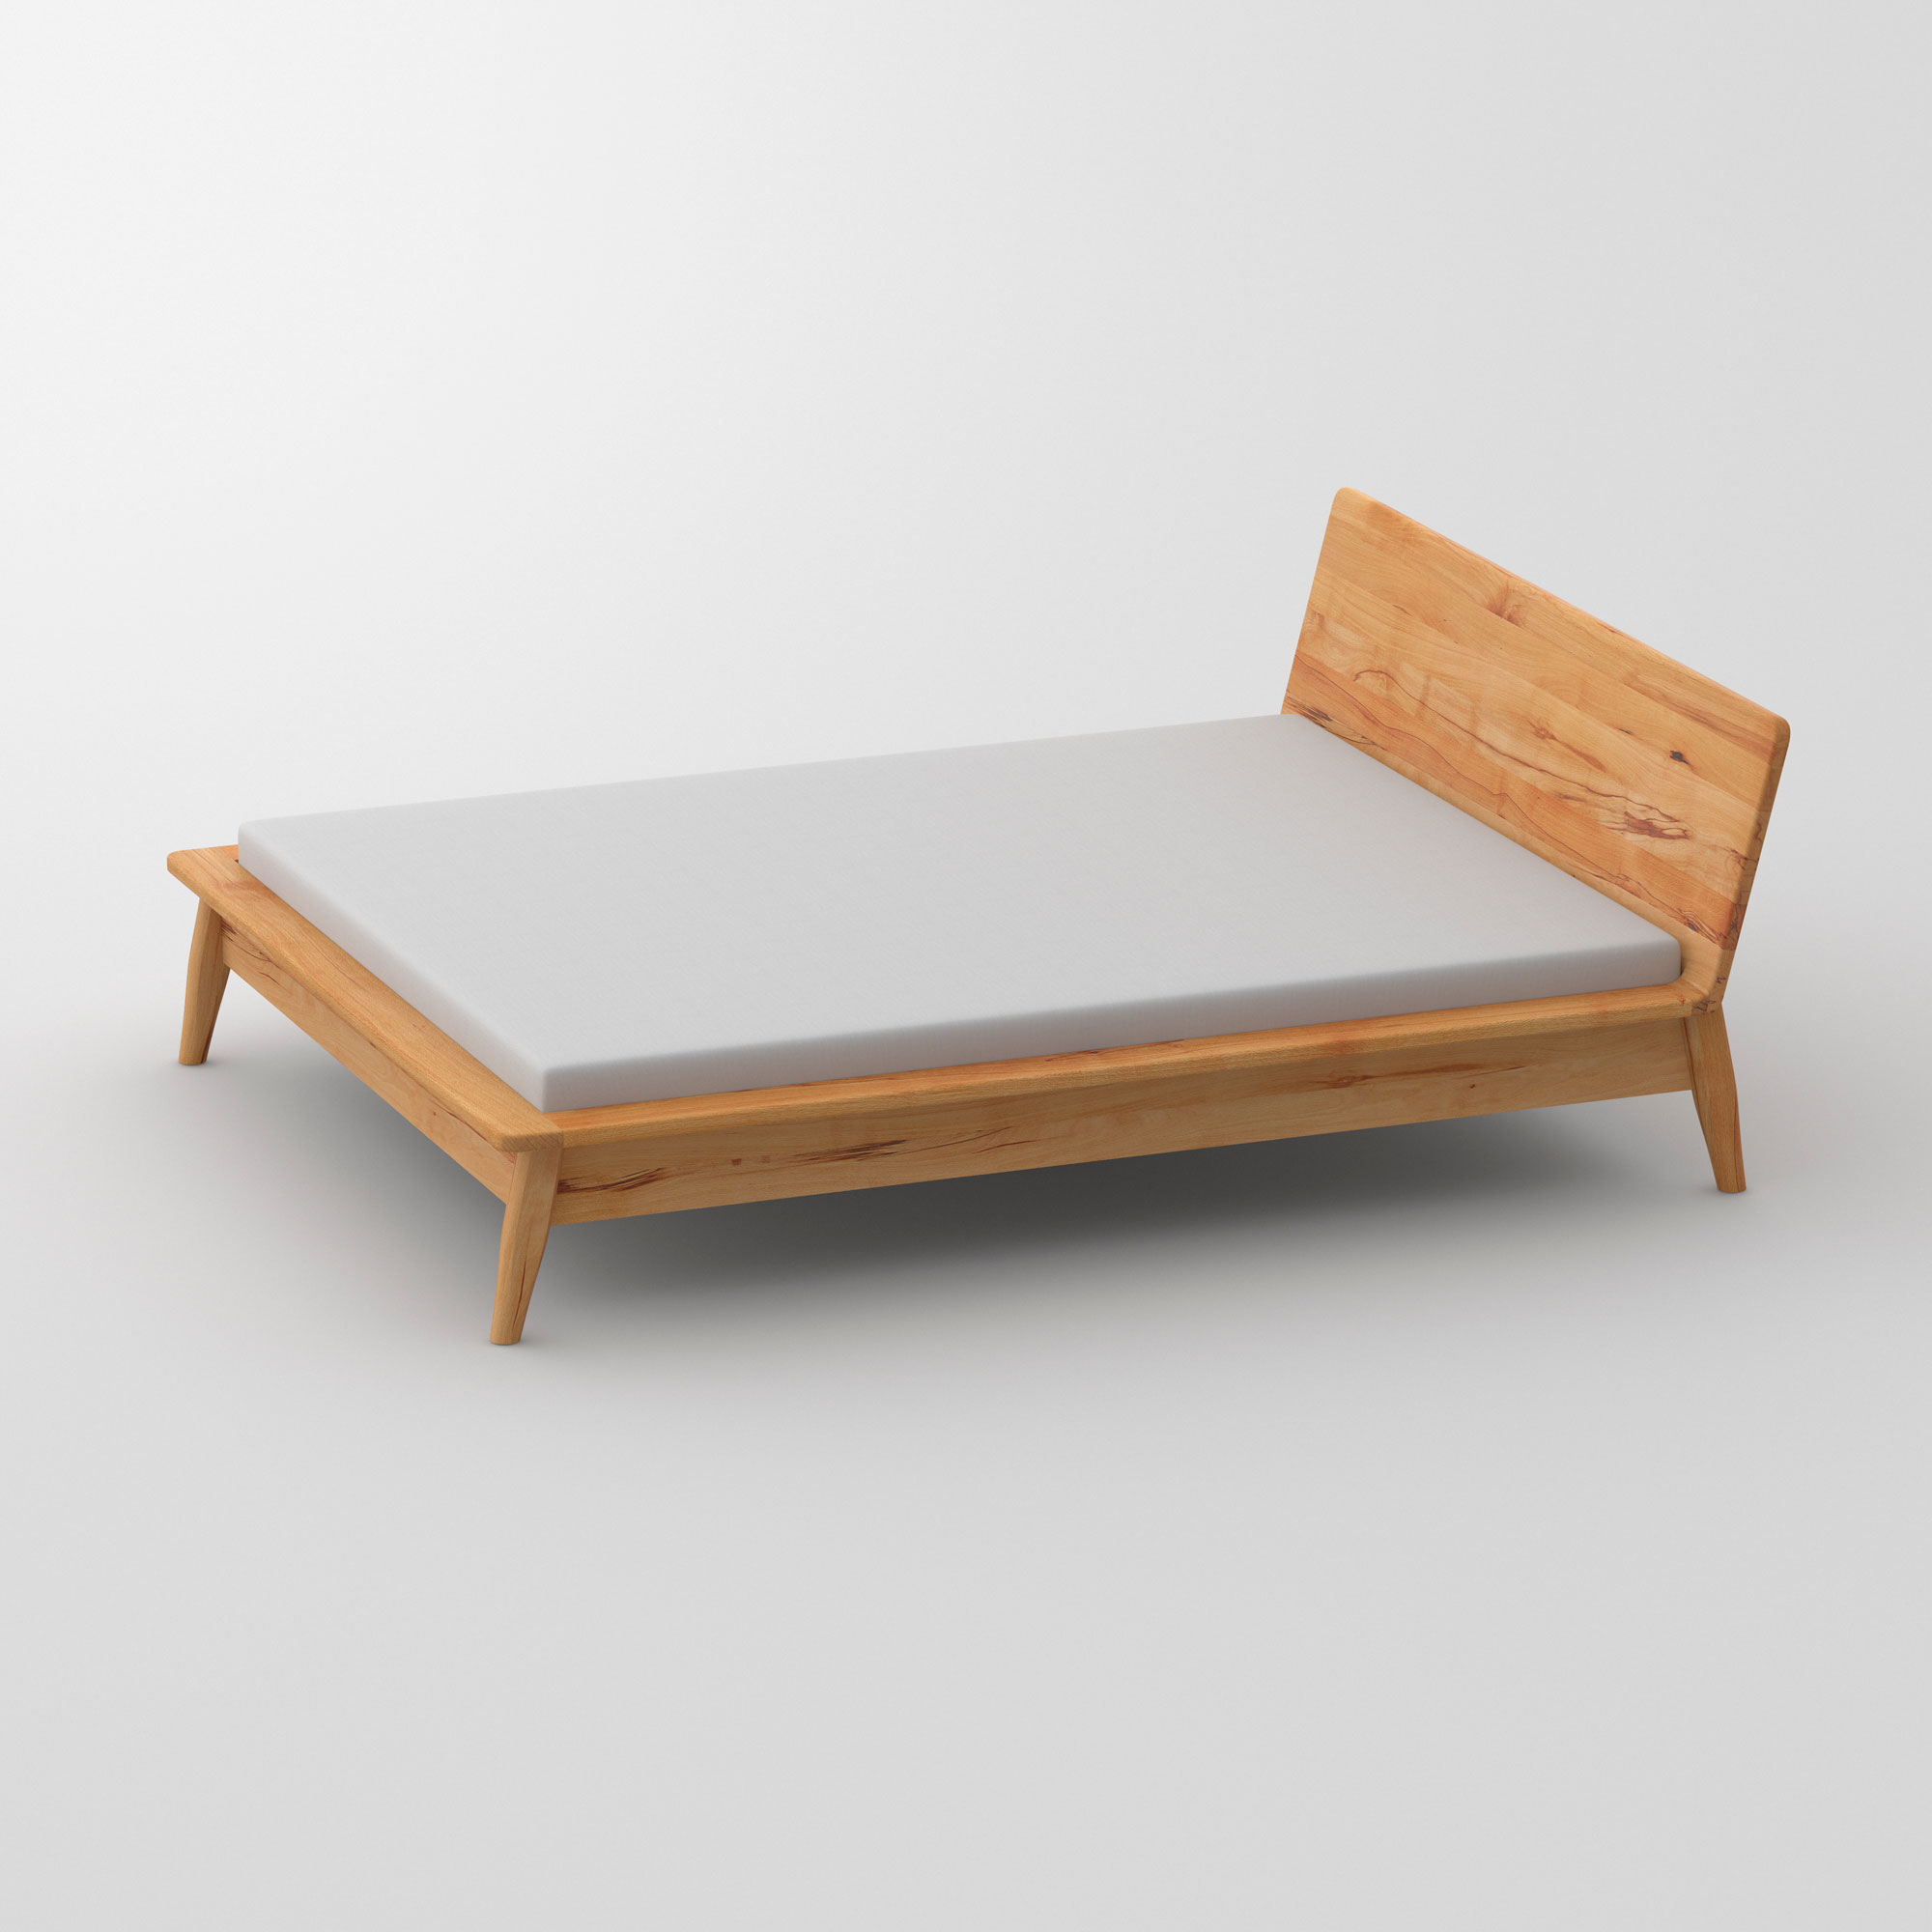 Designer Bed AETAS cam2 custom made in solid wood by vitamin design